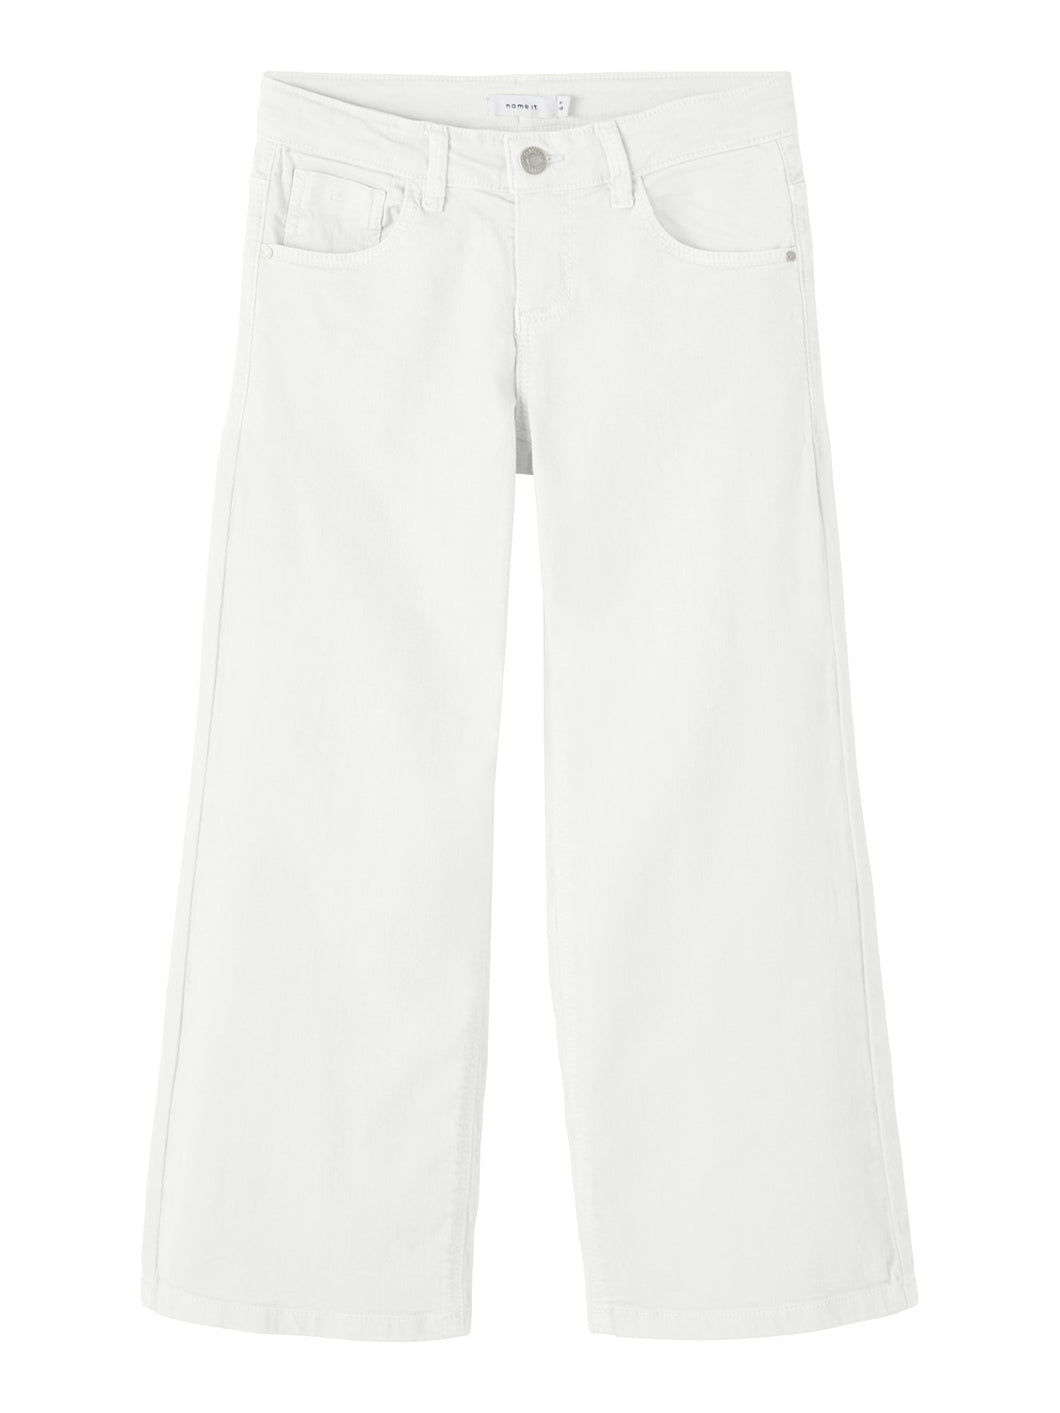 NKFROSE Pants - Bright White